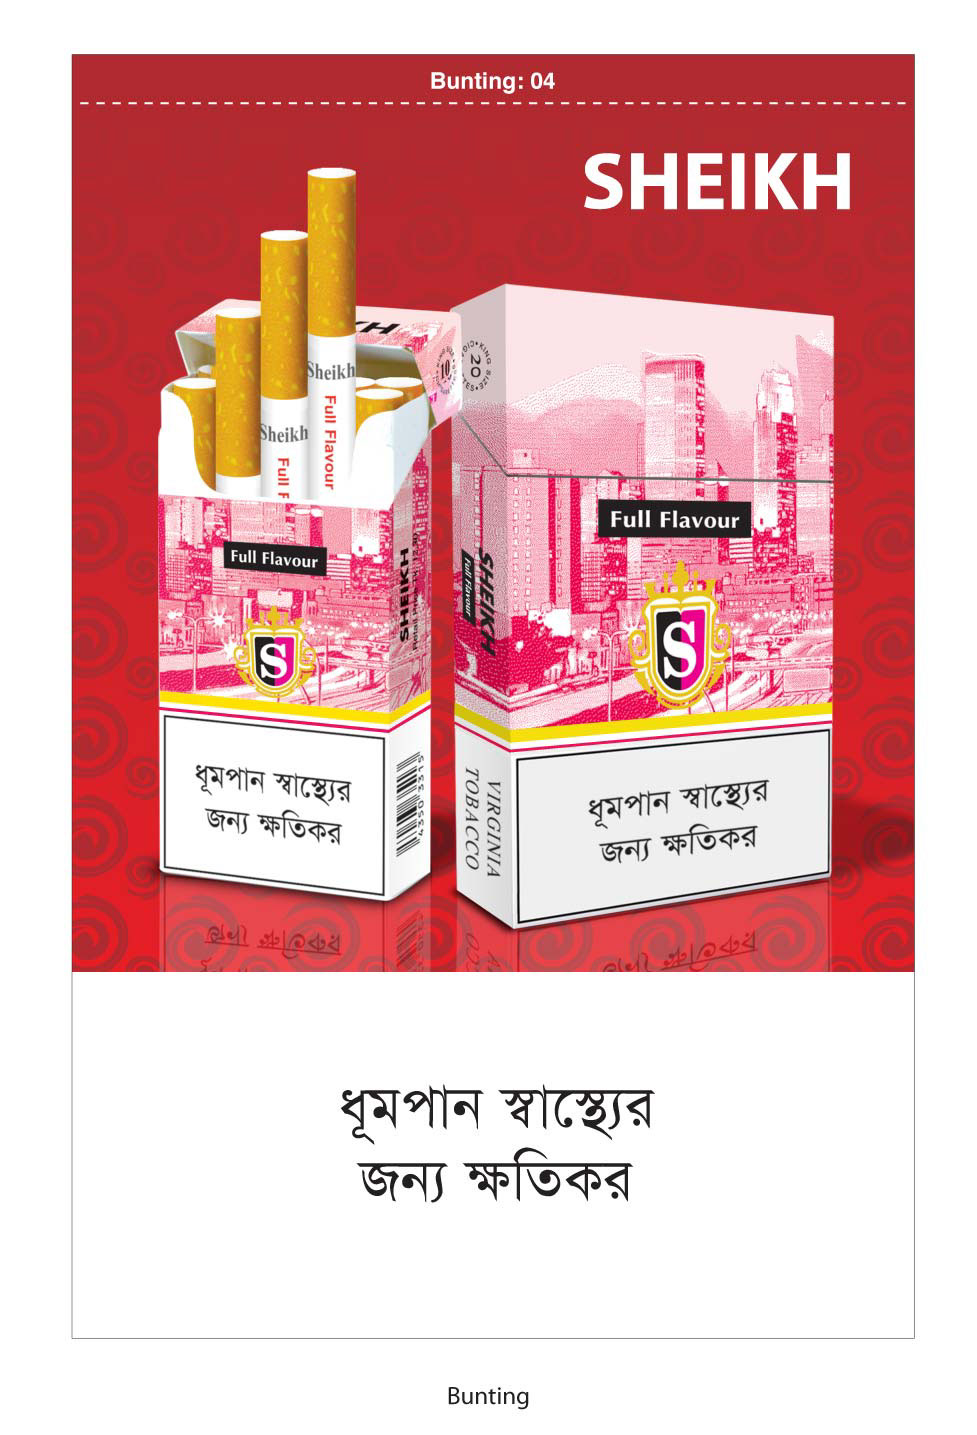 cigeratte bunting poster design sheikh dhaka tobacco Bangladesh